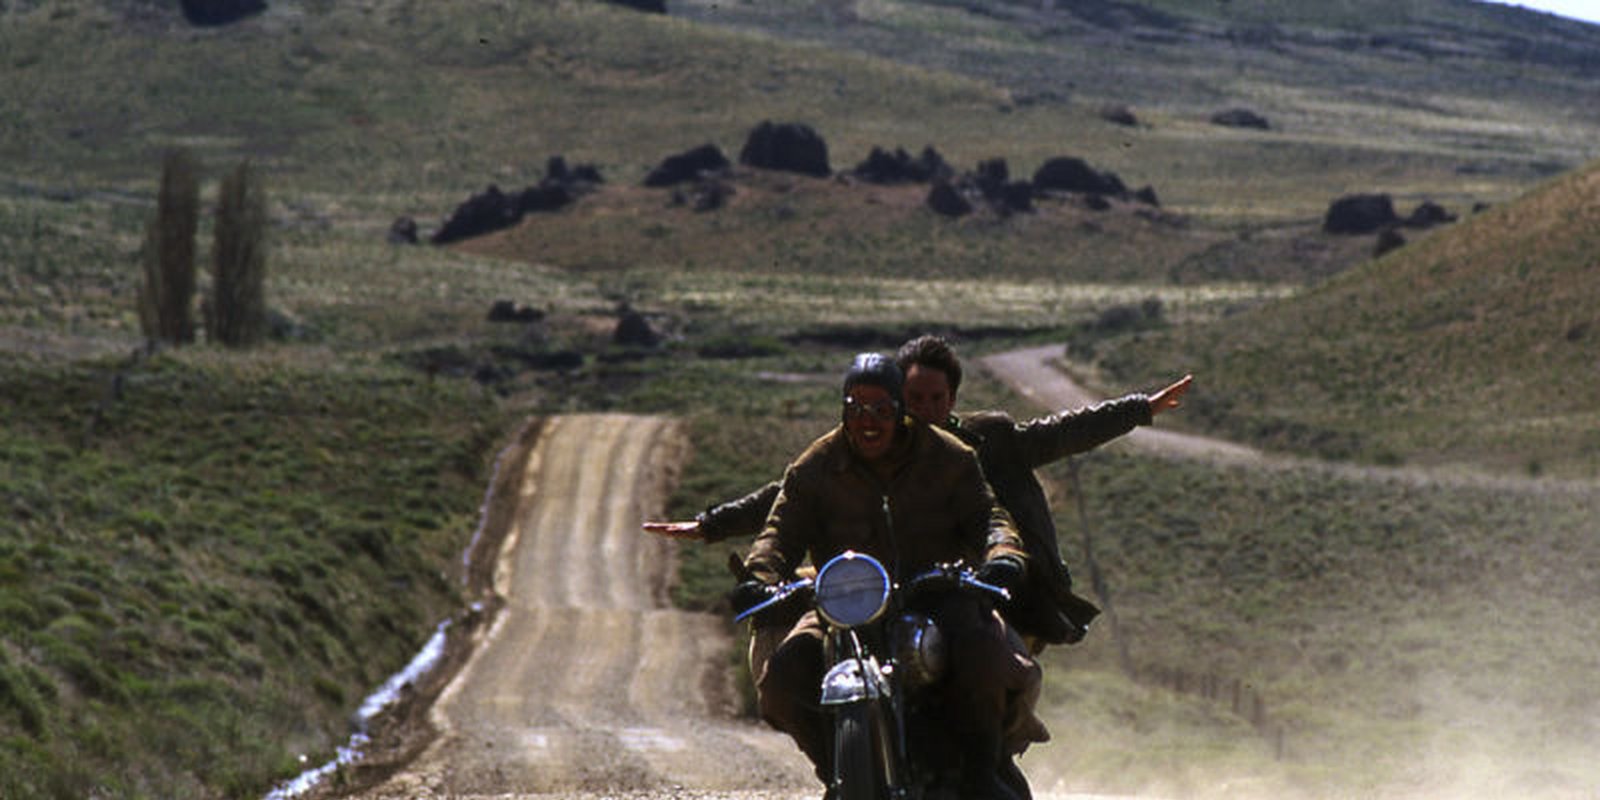 The Motorcycle Diaries - Die Reise des jungen Che